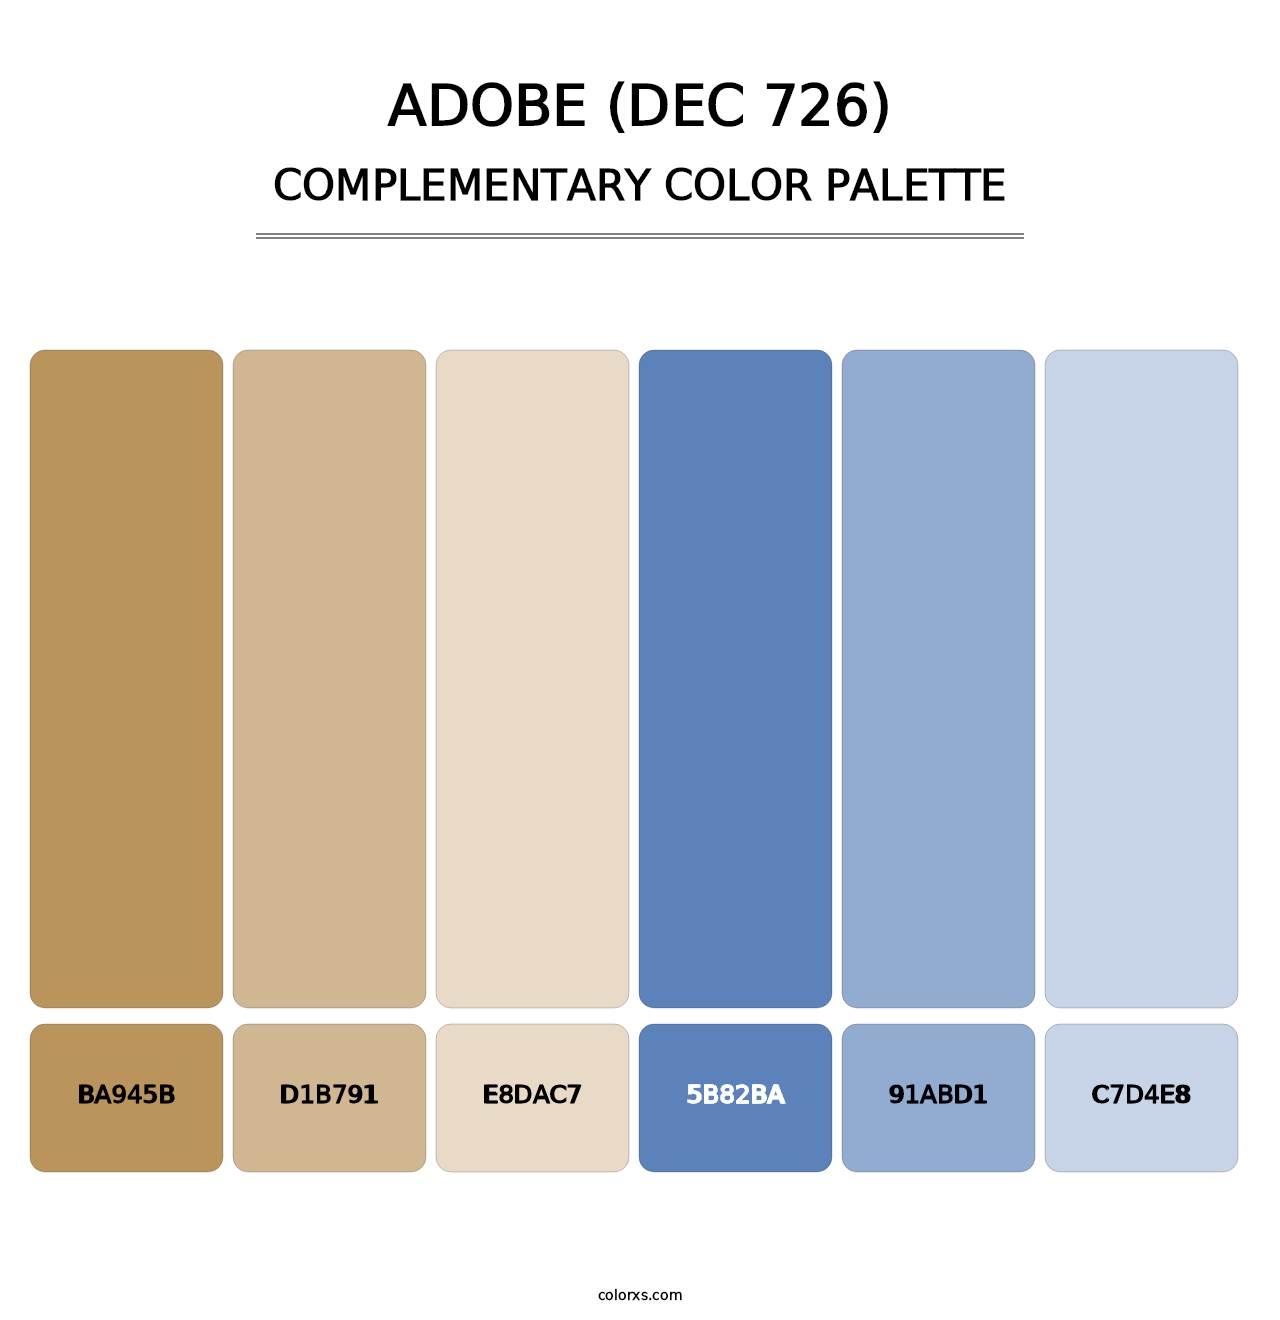 Adobe (DEC 726) - Complementary Color Palette